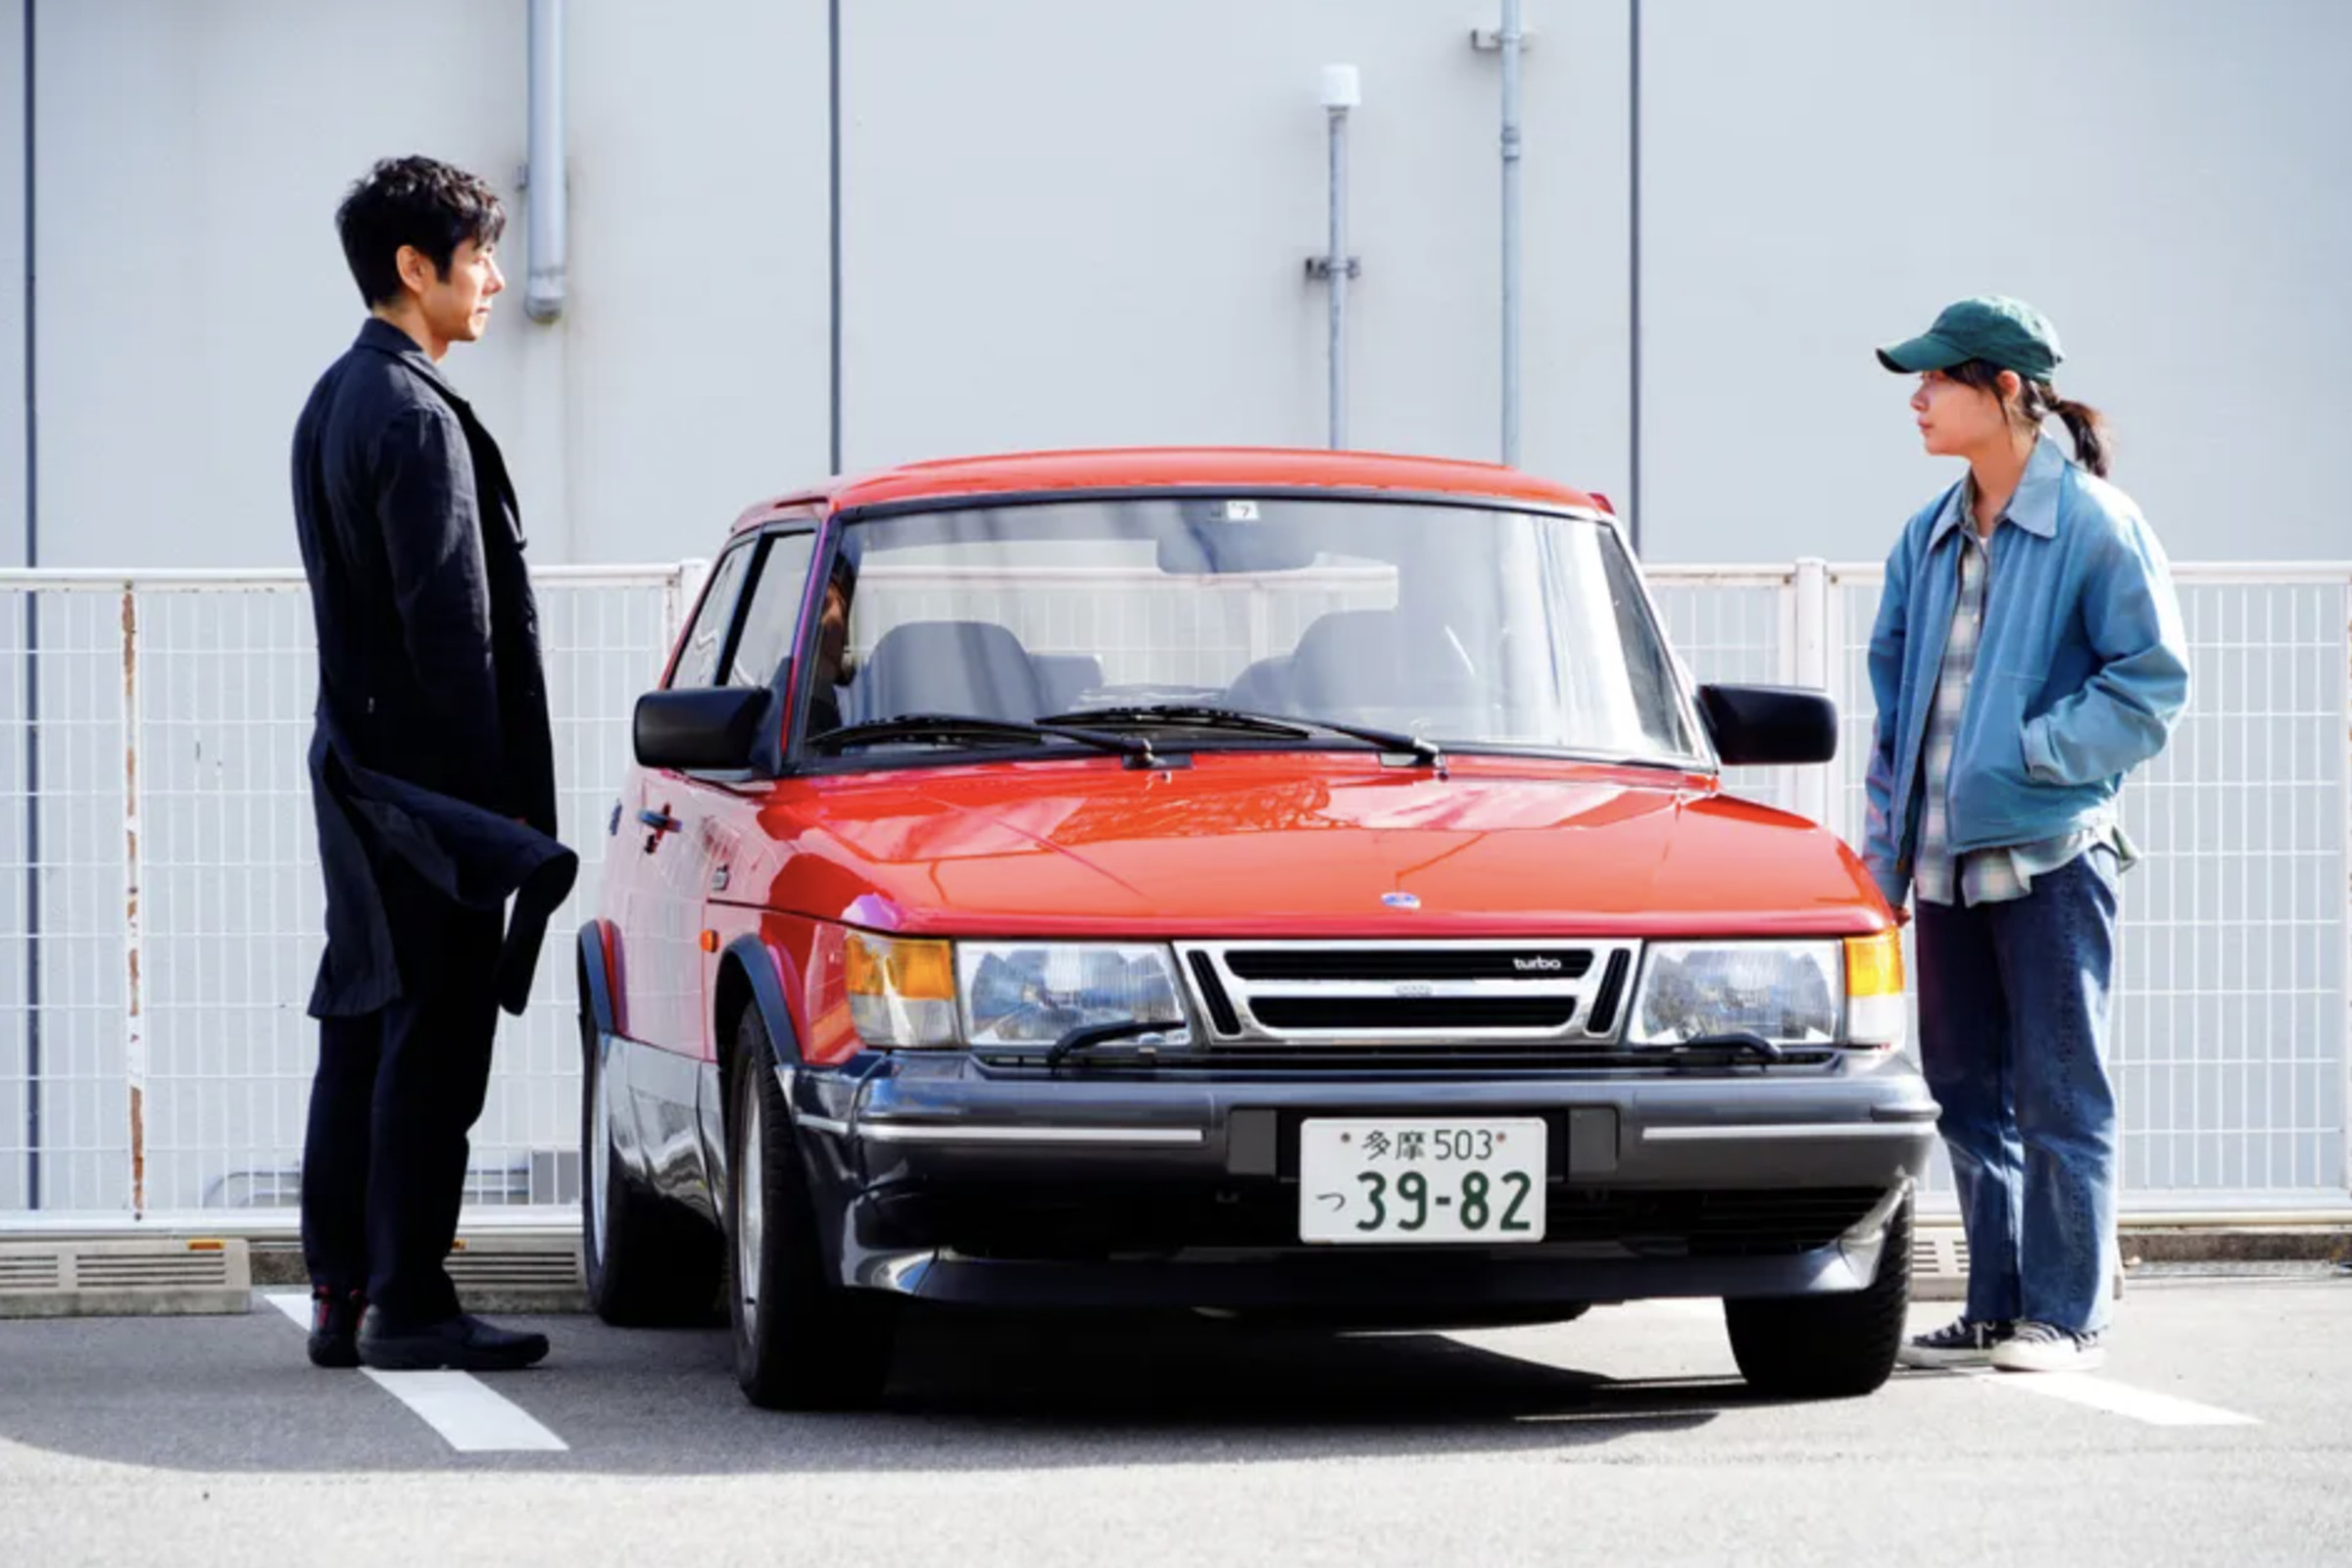 Actors Hidetoshi Nishijima&nbsp;and Tôko Miura with the titular car